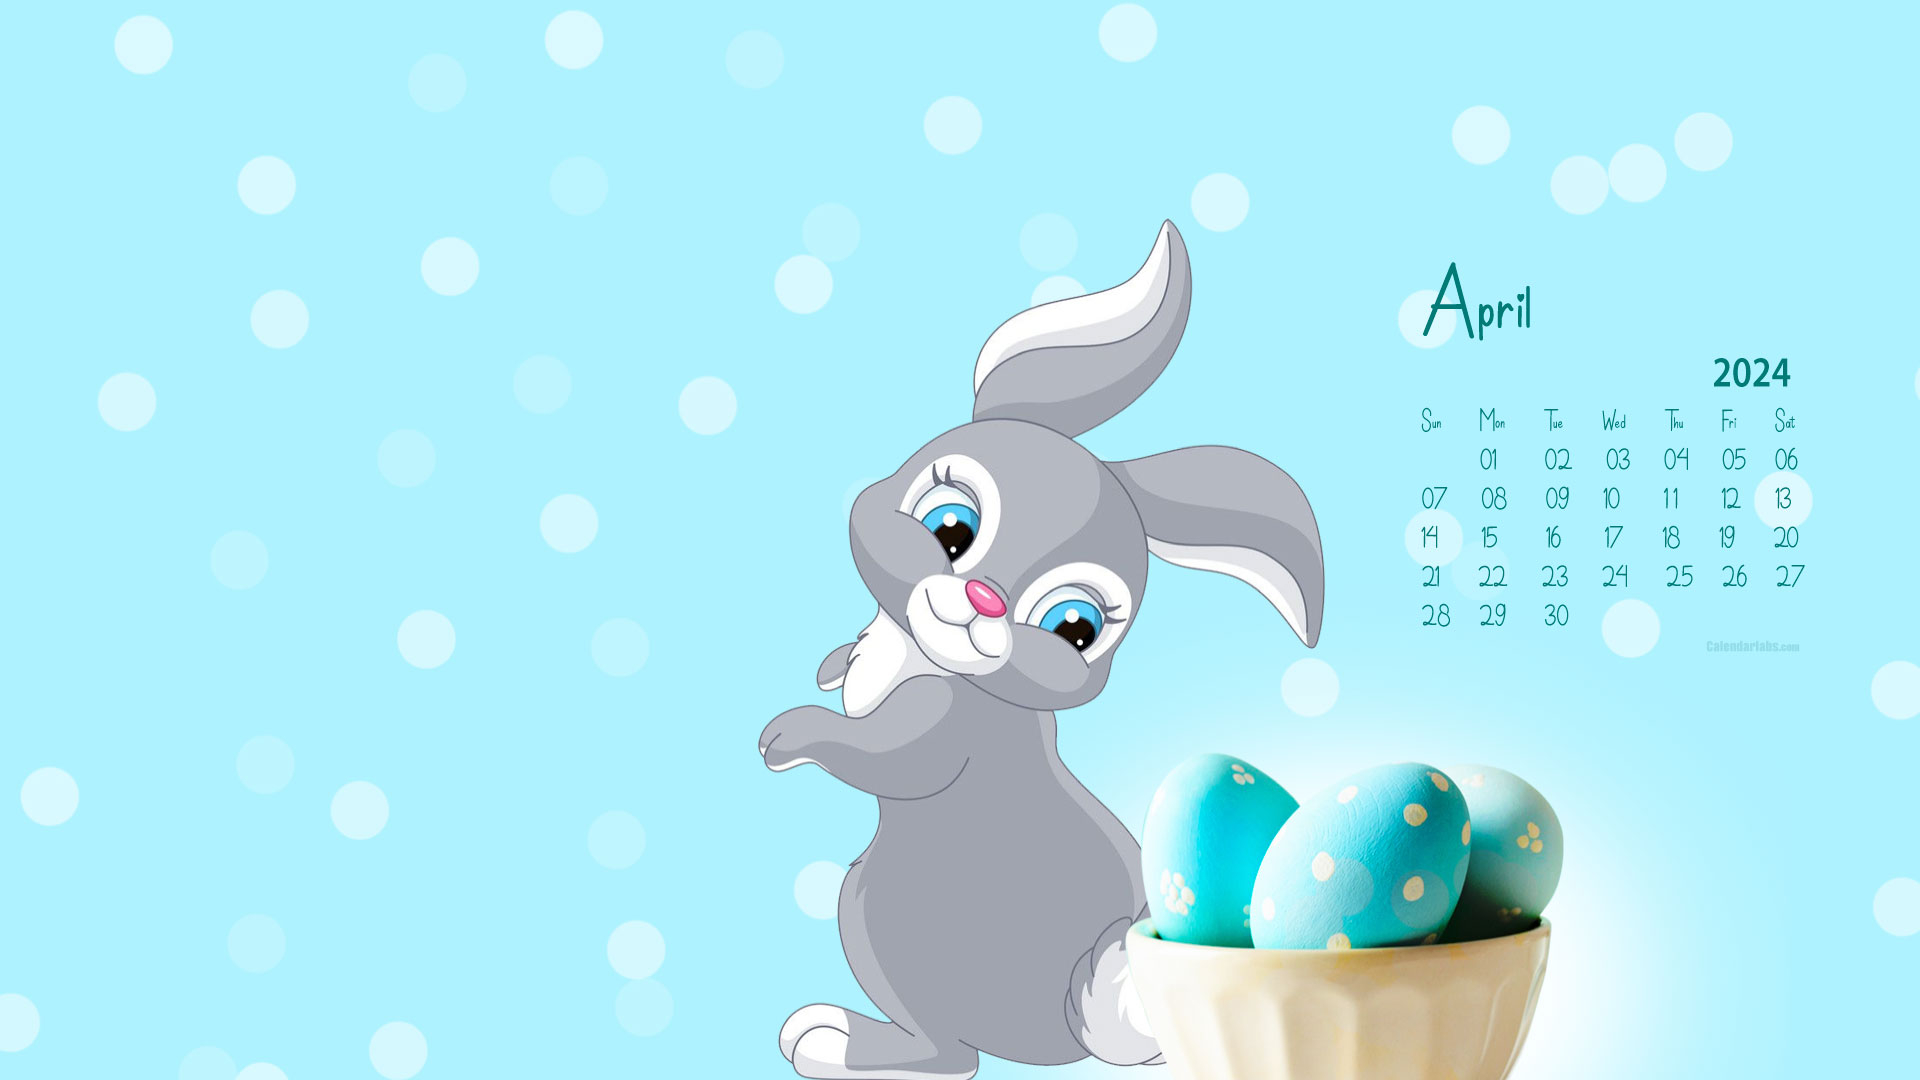 April 2024 Desktop Wallpaper Calendar - Calendarlabs intended for April 2024 Calendar Wallpaper Desktop